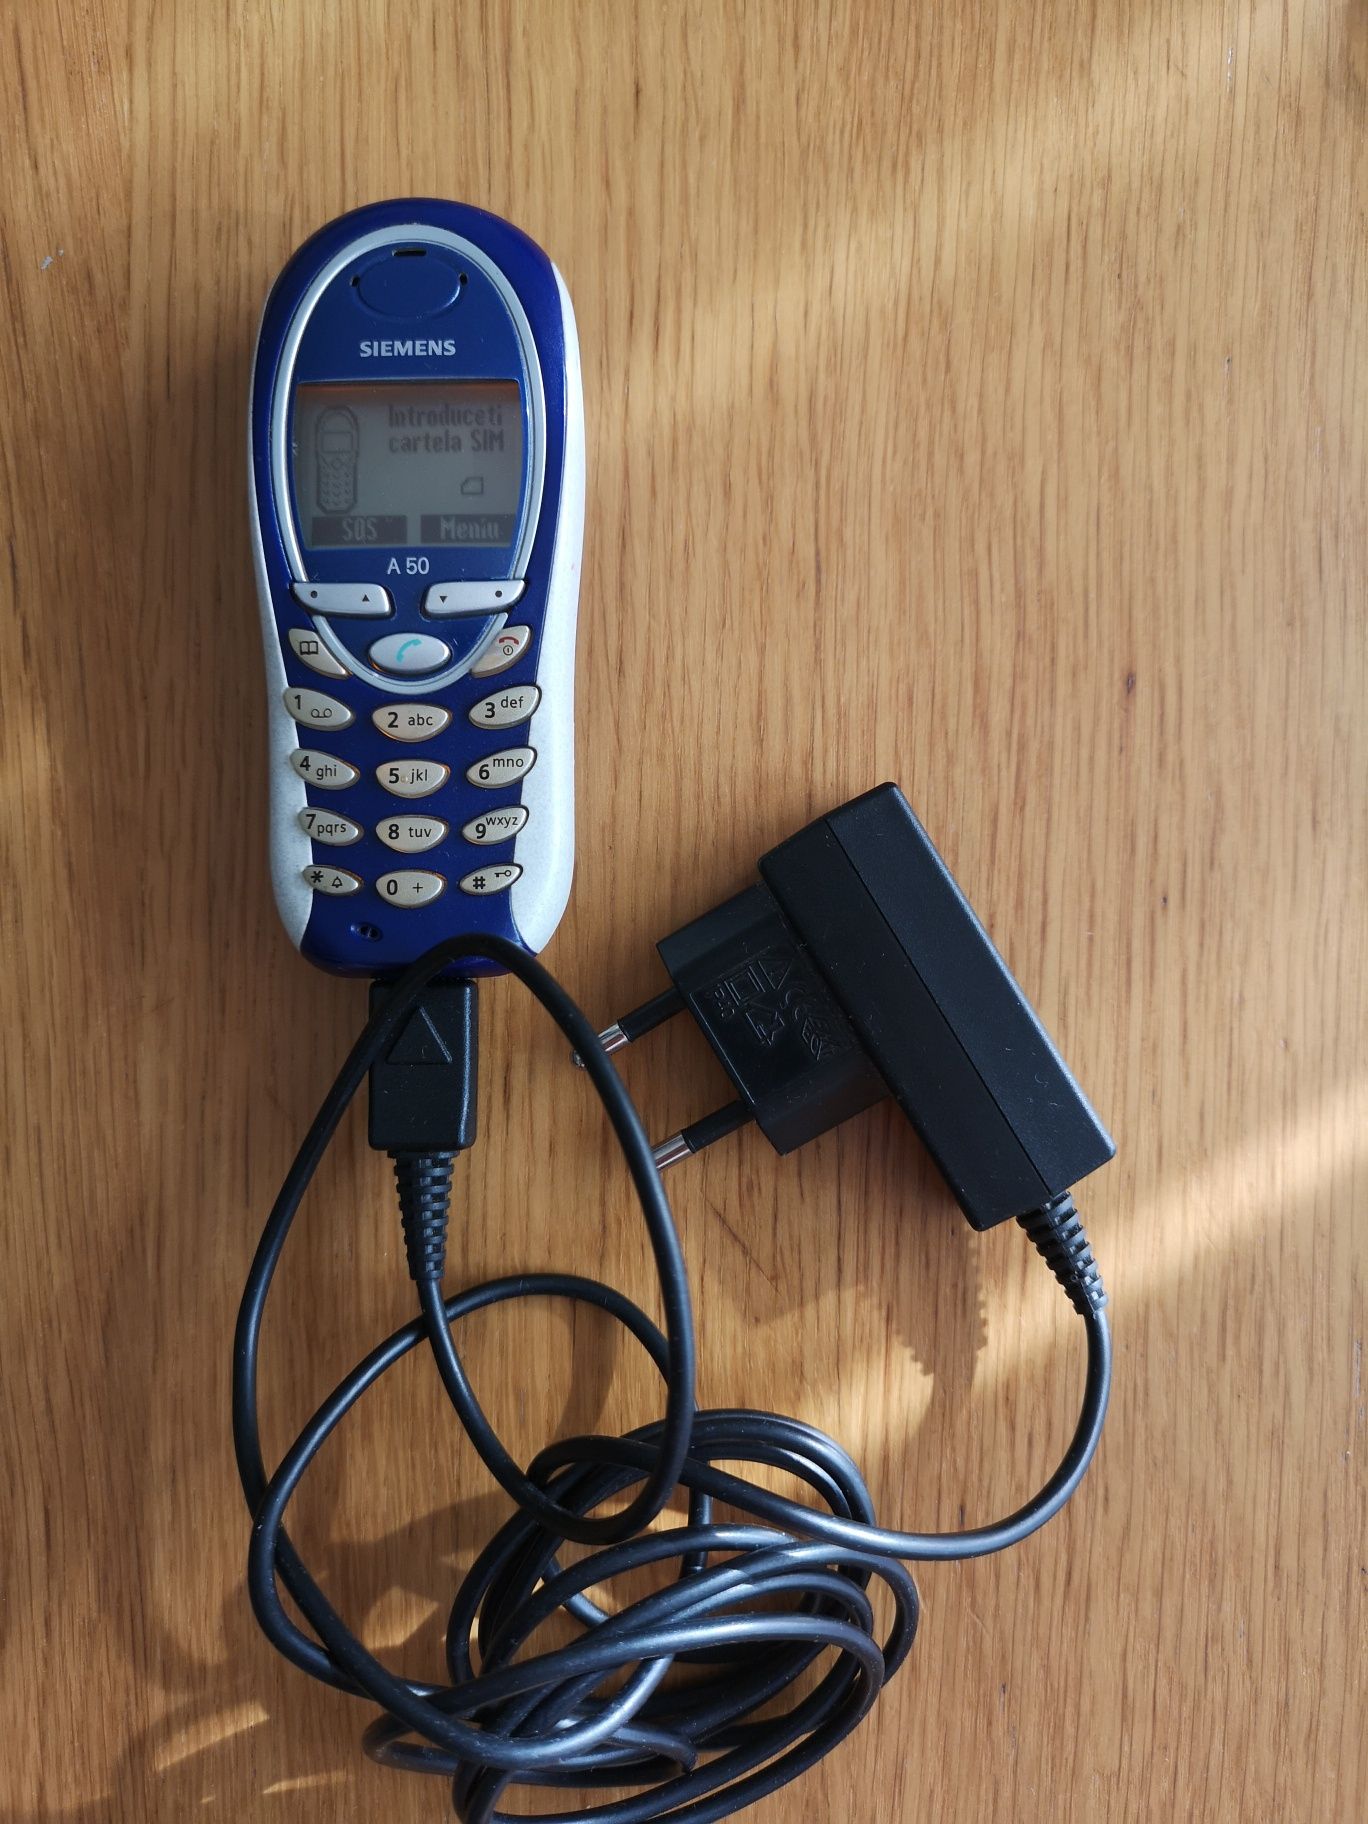 Telefoane mobile vechi LG, Nokia, Allview, Asus Zen phone, Philips